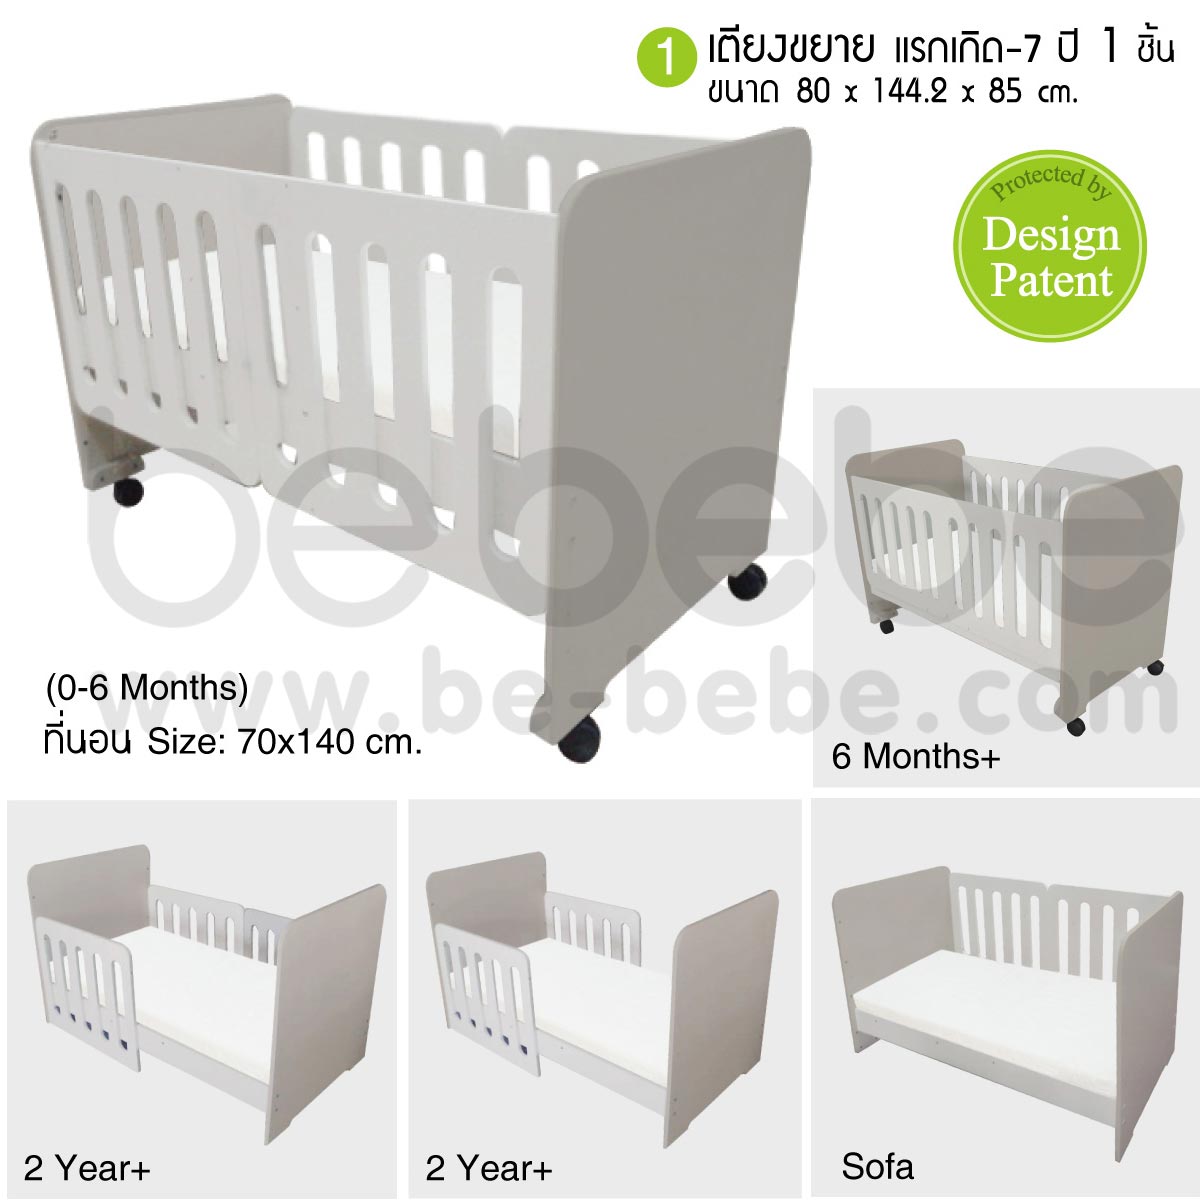 be bebe :ชุดเตียงเด็กแรกเกิด-7ปี (70x140)ปรับเป็นโซฟาได้+ที่นอนฟองน้ำ+ชุดเครื่องนอน+ตู้เสื้อผ้า+ตู้เตี้ย /เทา